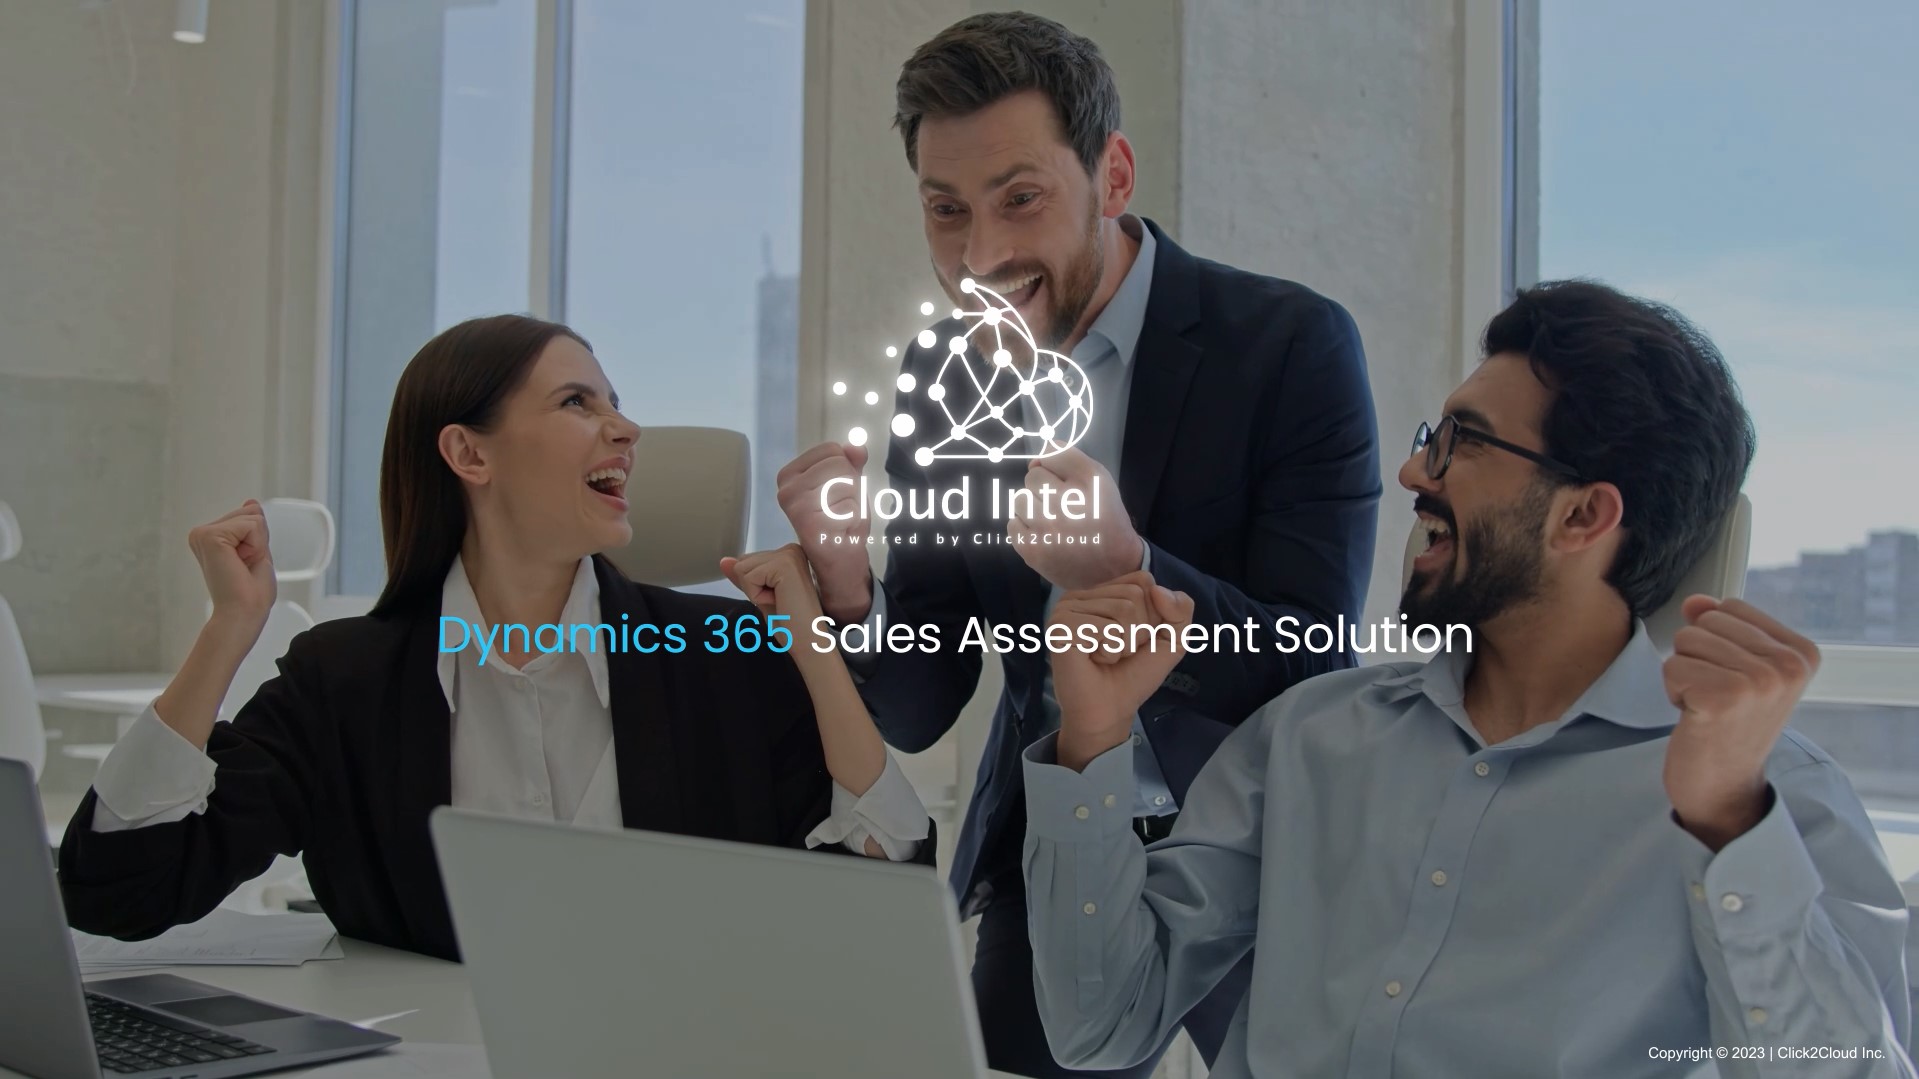 Click2cloud-Amplify Your Sales Team's Productivity with Cloud Intel's Dynamics 365 Sales Assessment_Video